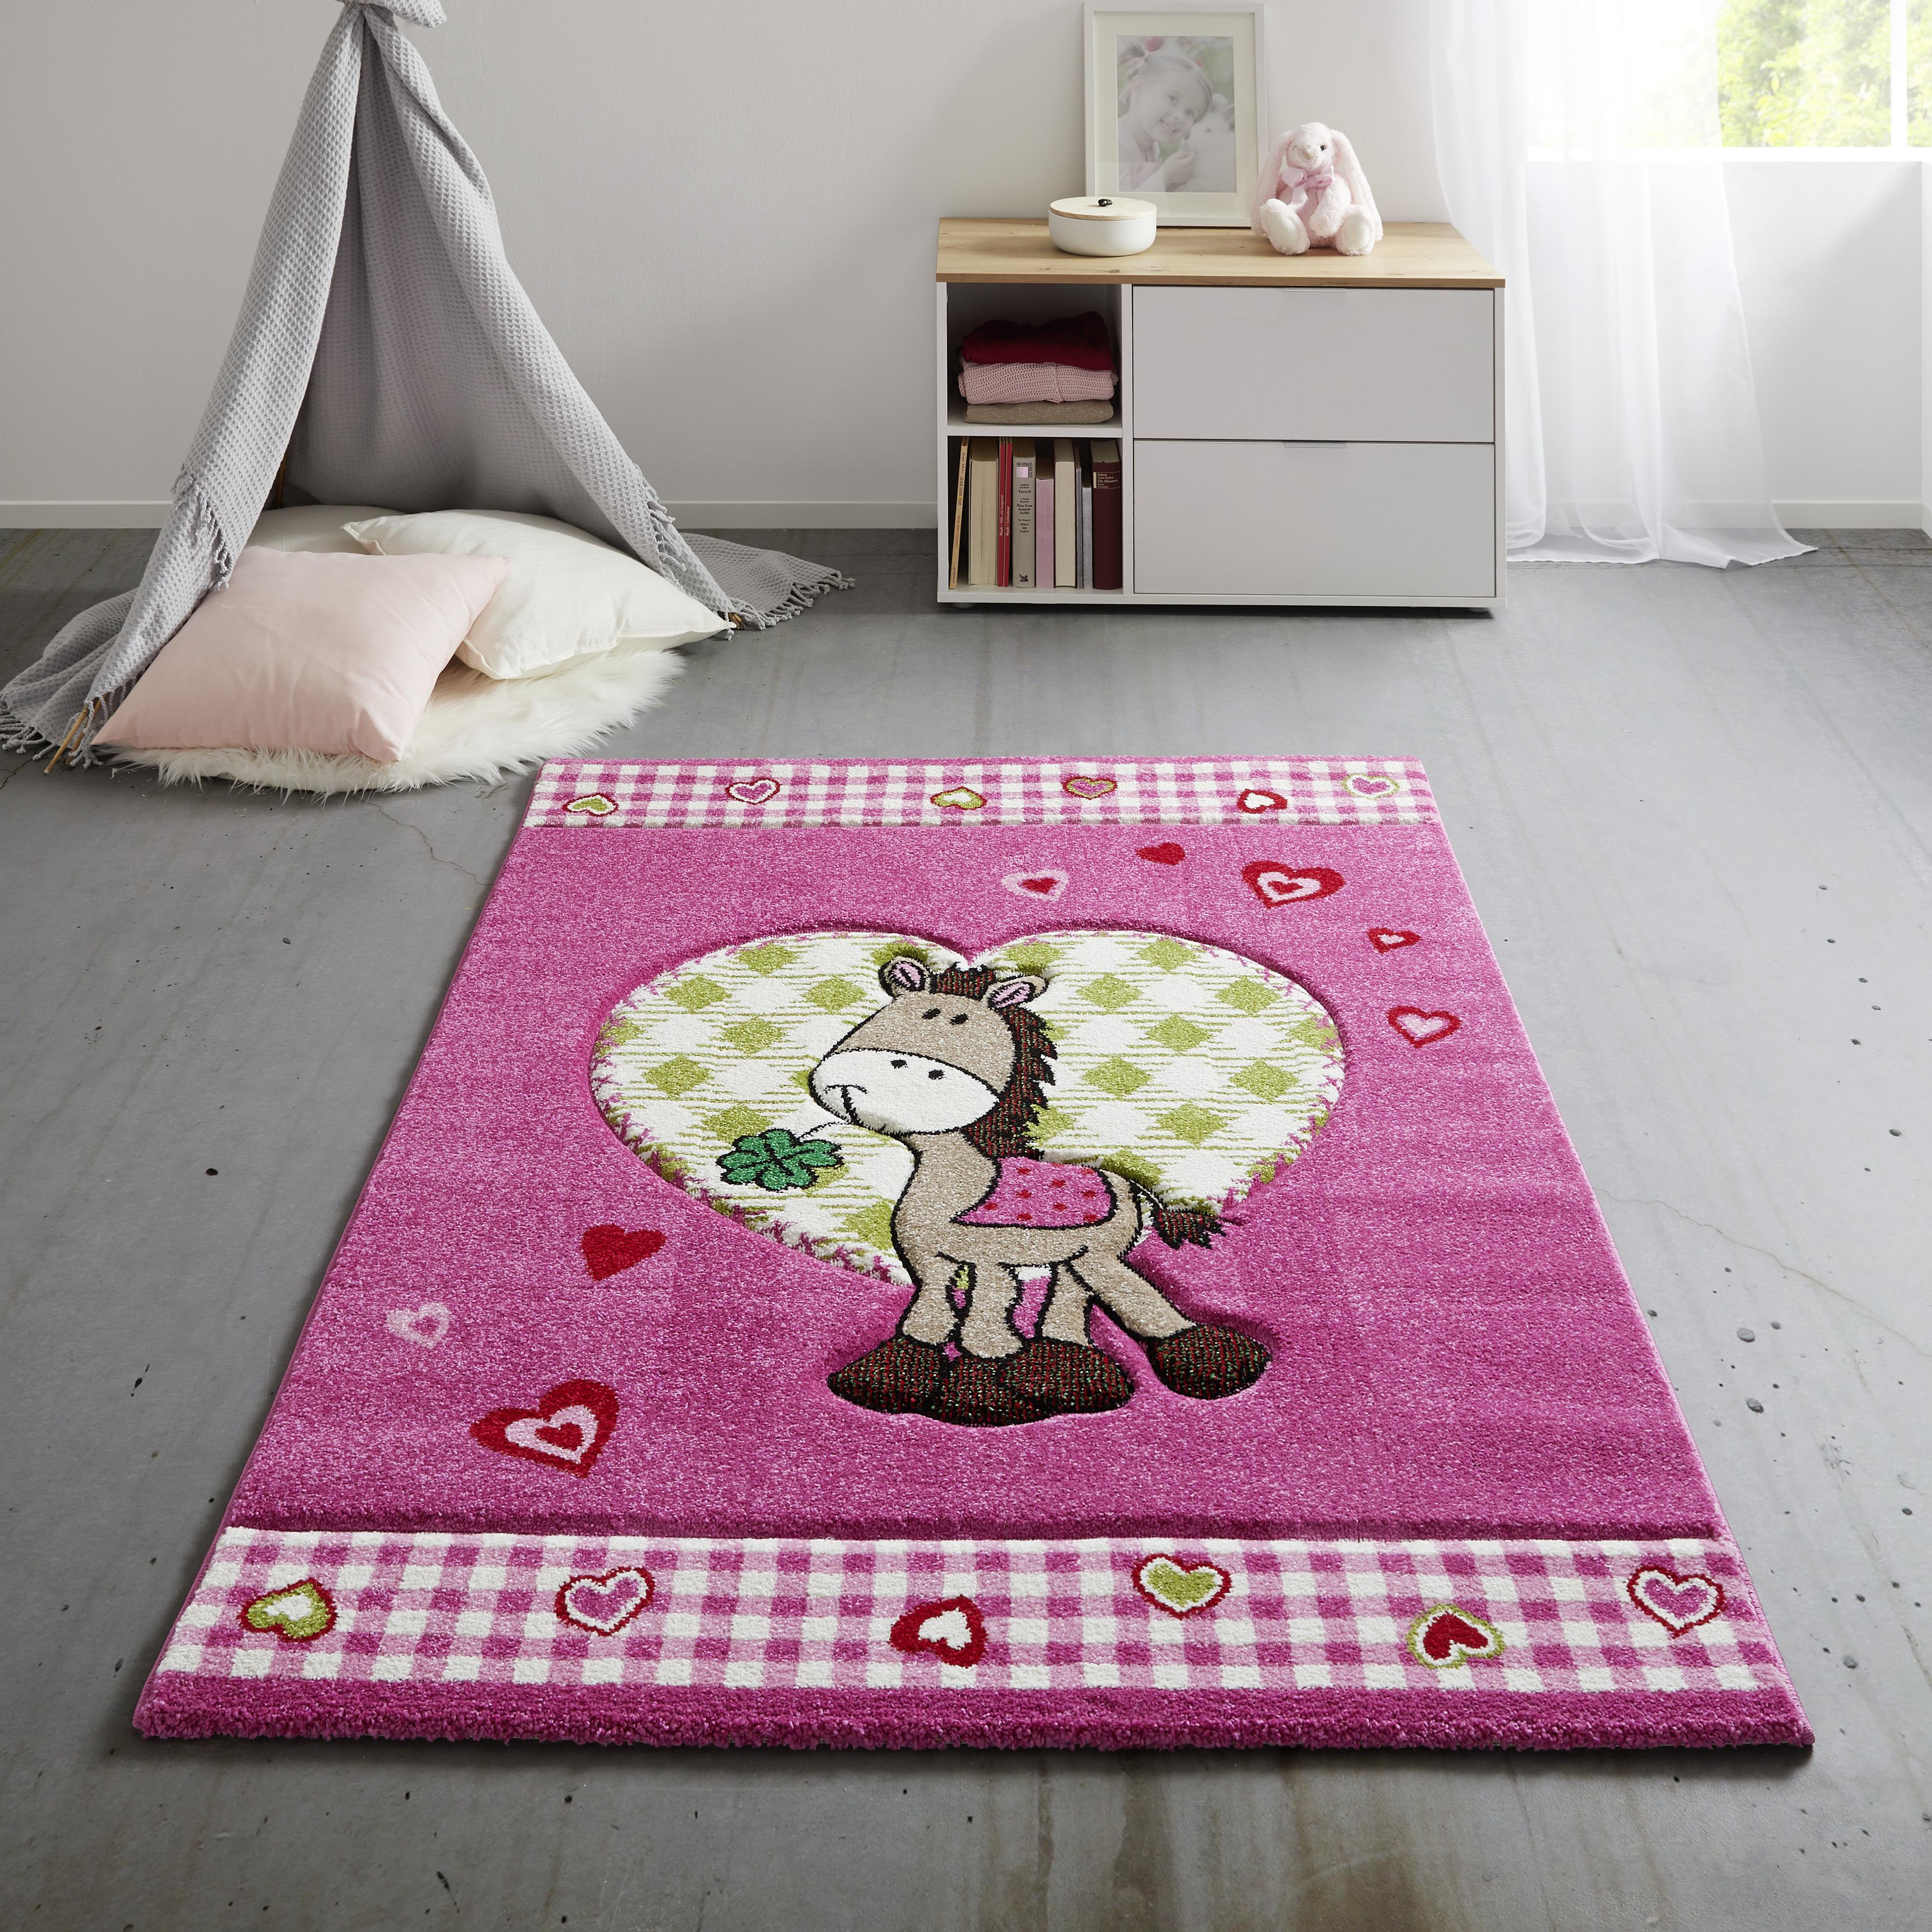 Kinderteppich Pony in Pink ca. 120x170cm - Pink, Textil (120/170cm) - Modern Living